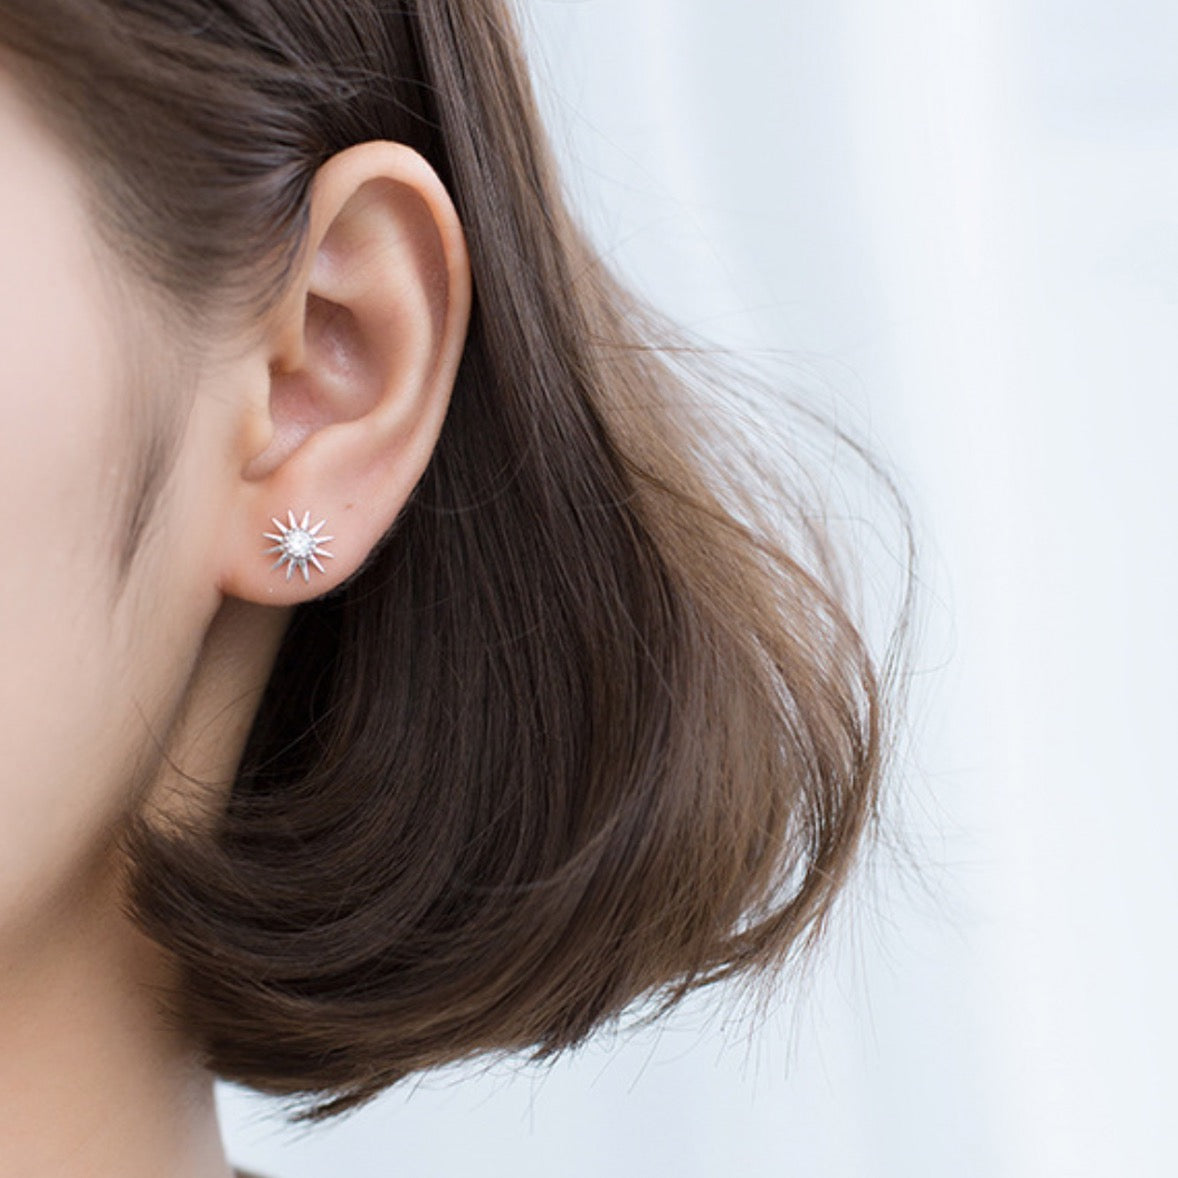 Crystal Moon and Star Stud Earrings